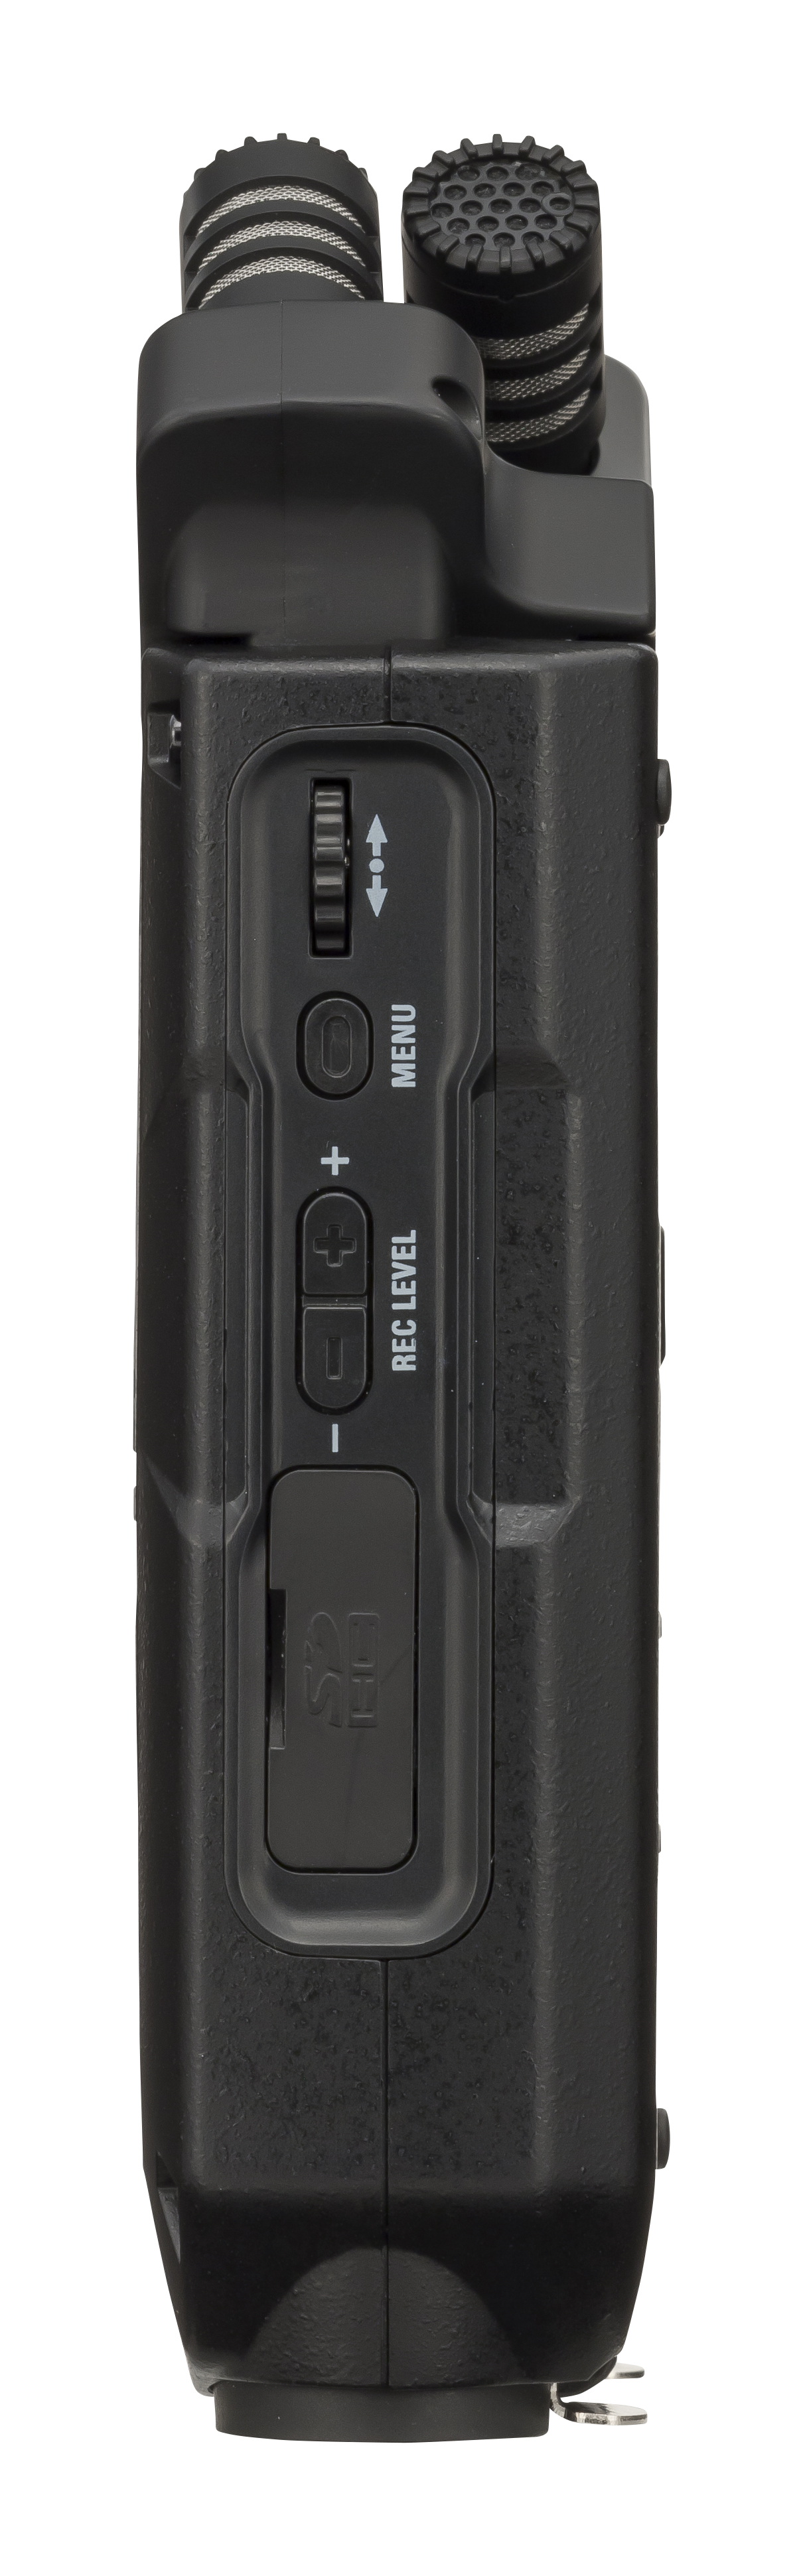 Zoom H4n Pro Black + Pack Accessoires - Portable recorder - Variation 3